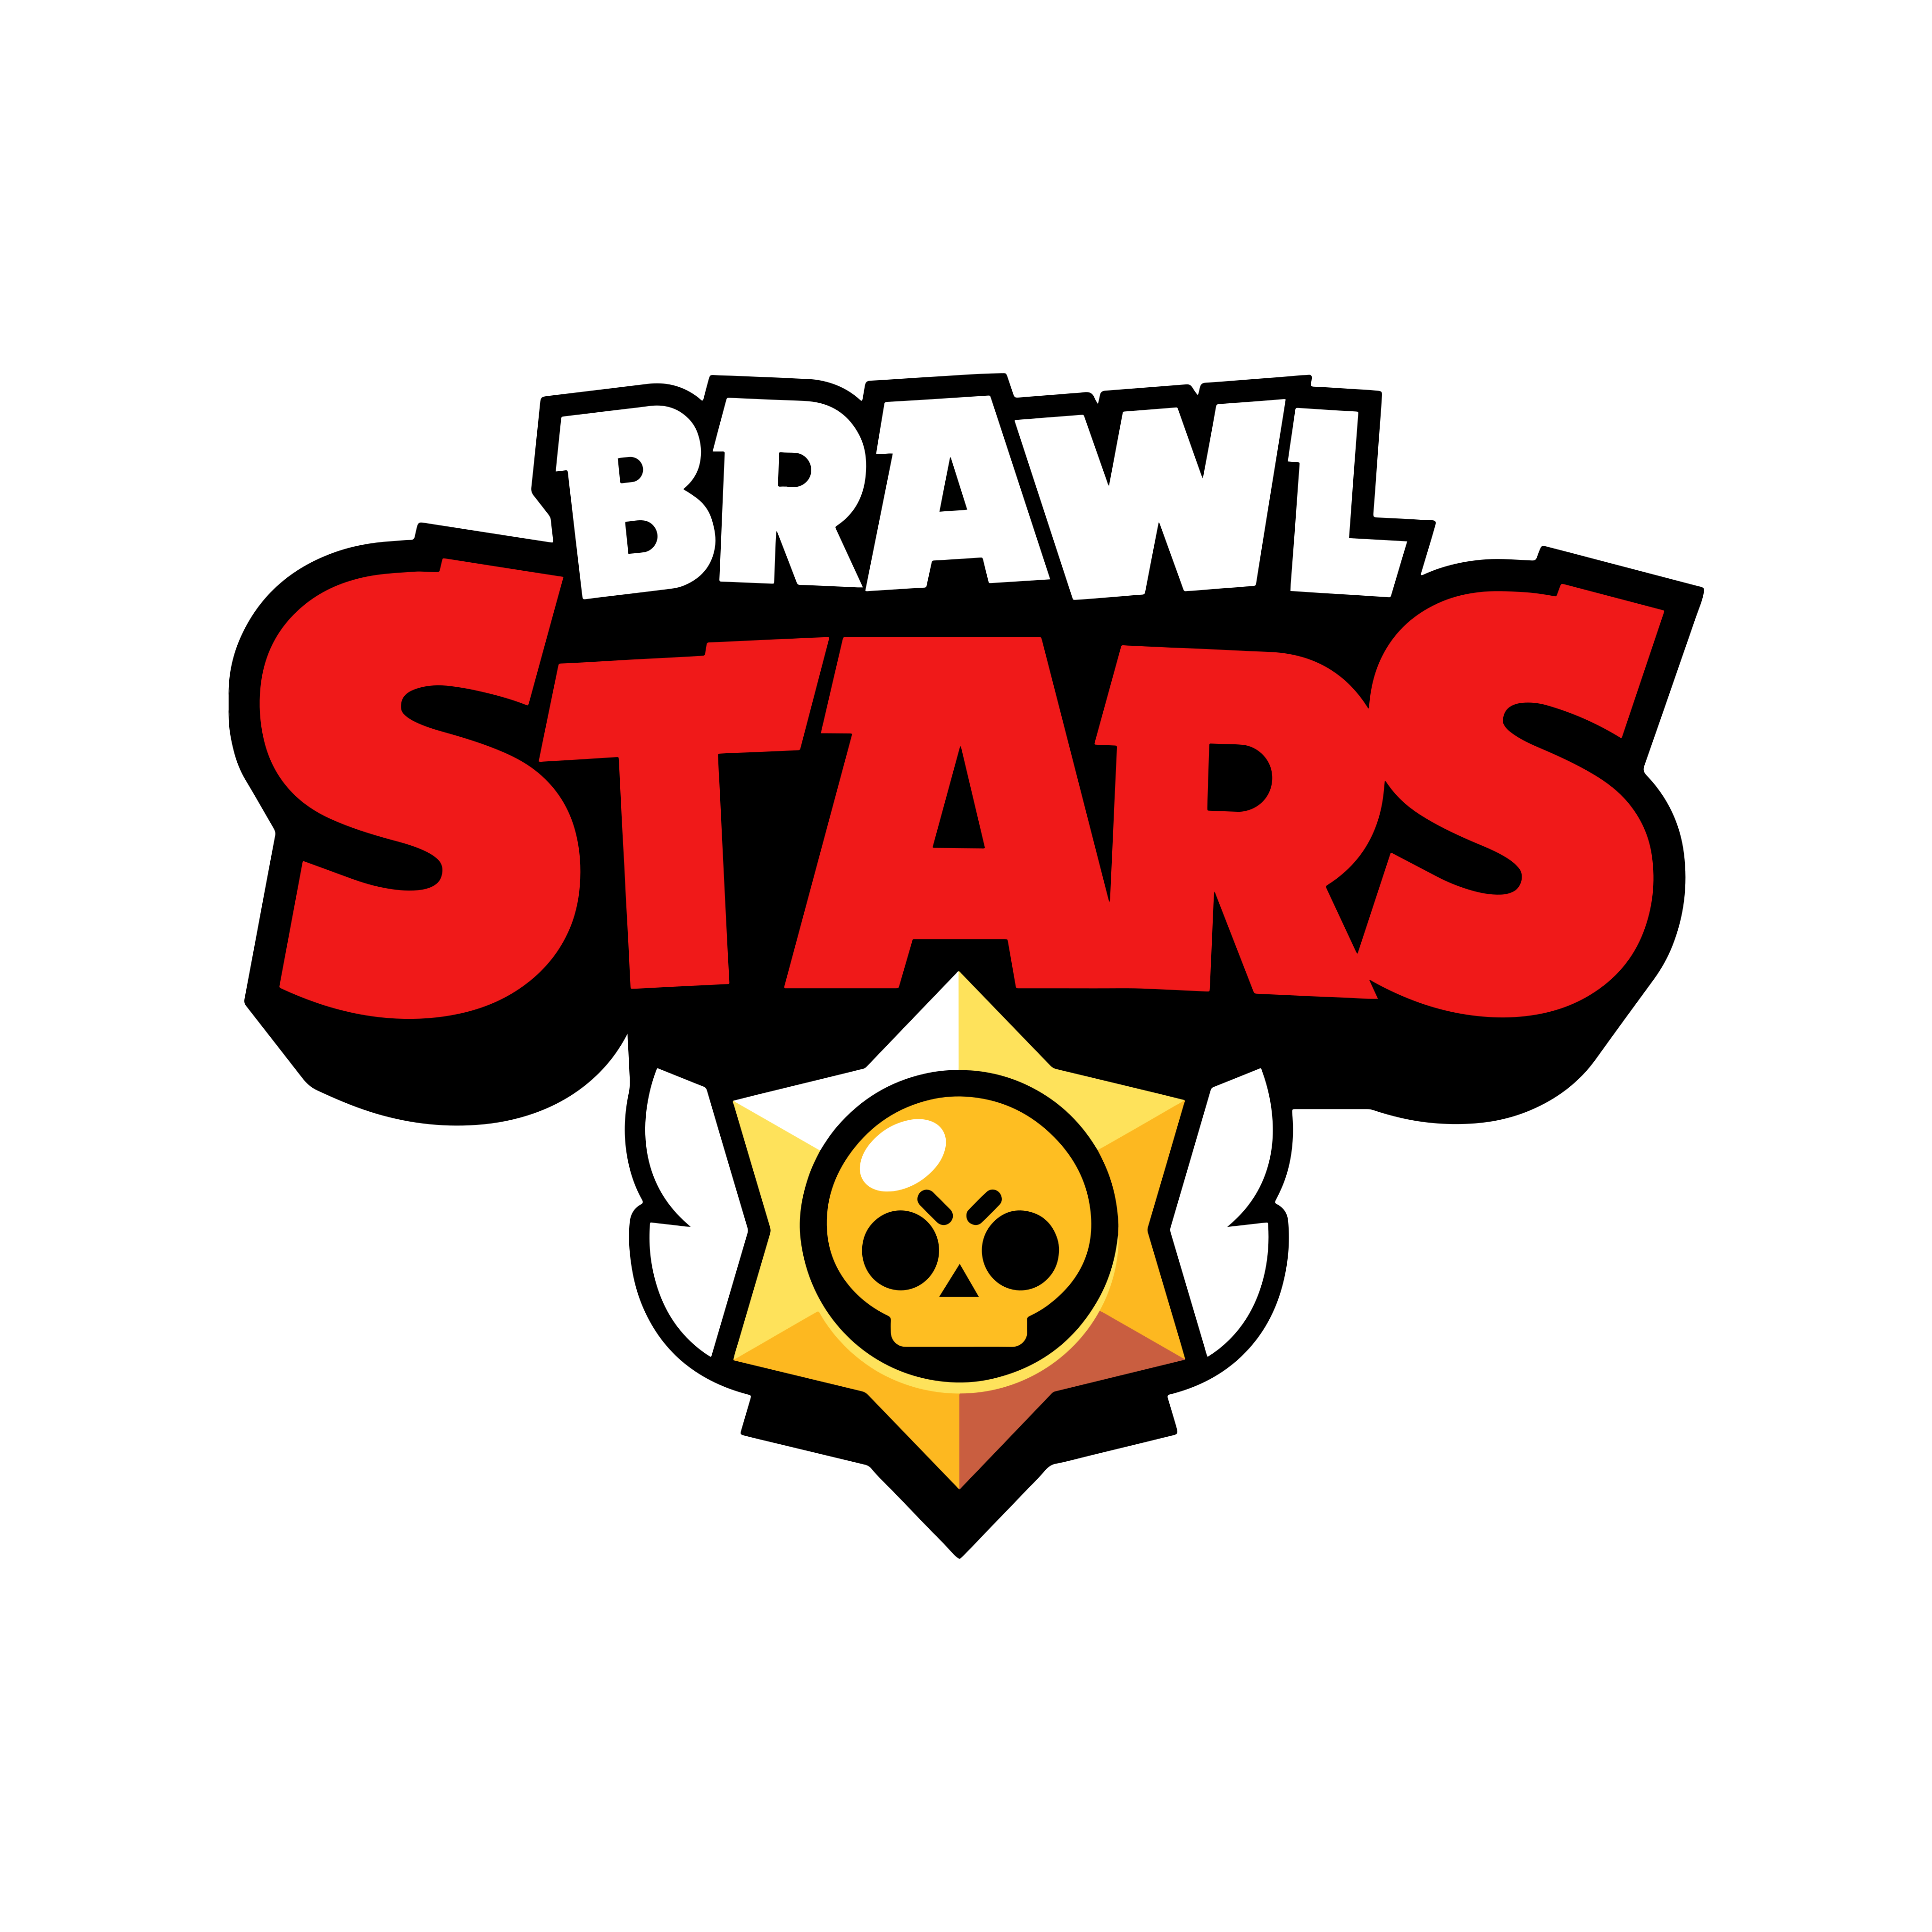 brawl stars logo 0 - Brawl Stars Logo